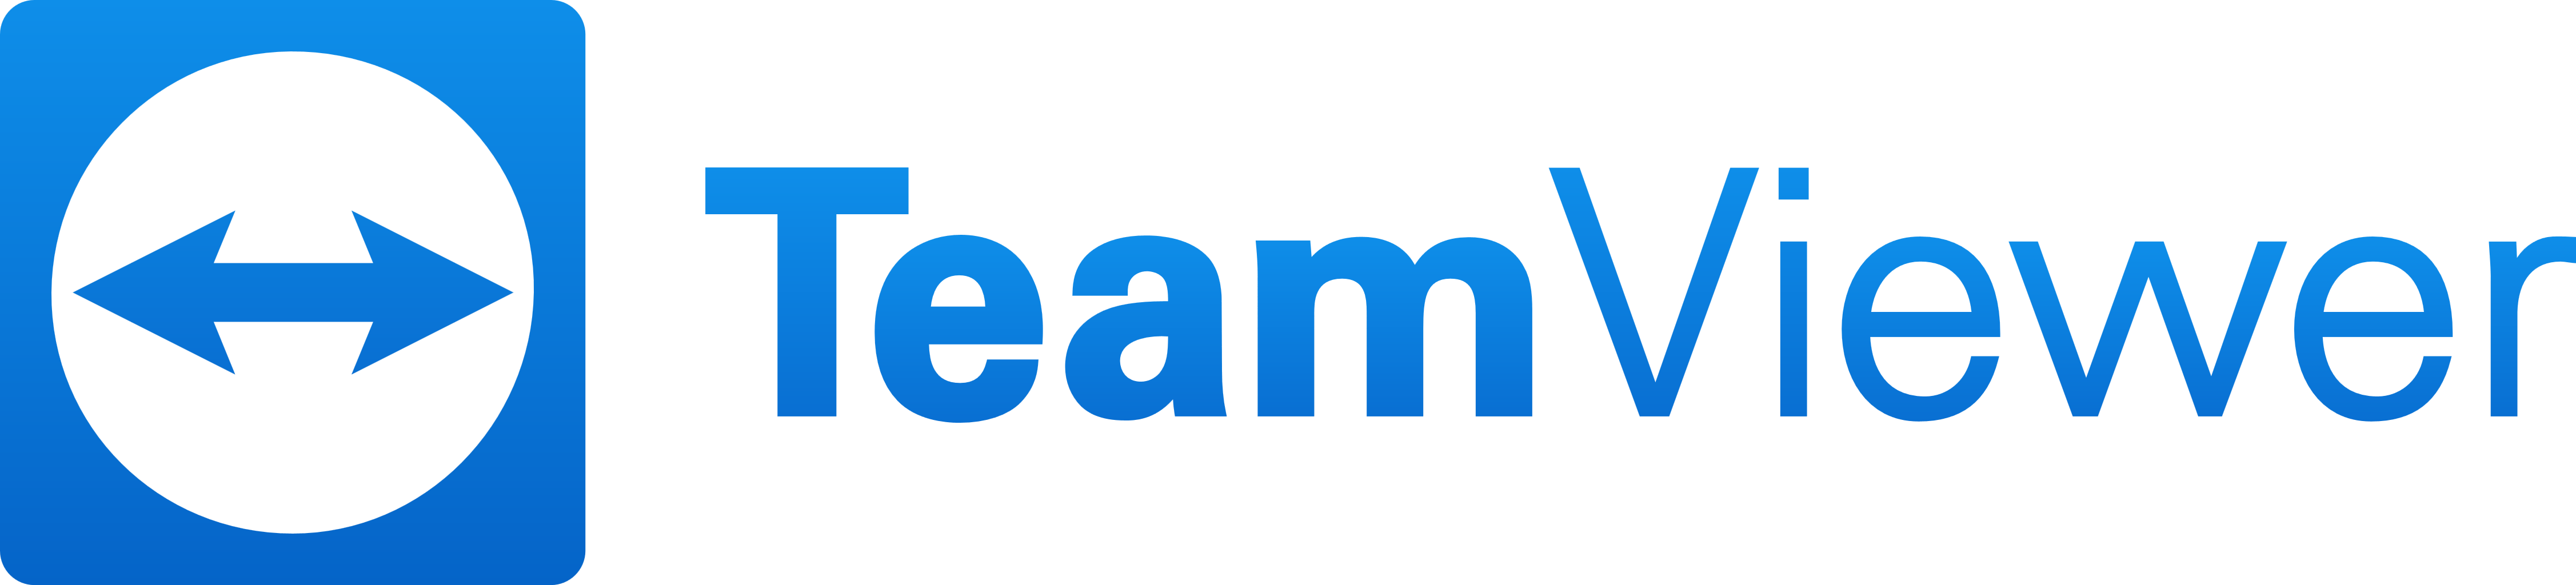 team viewer logo png